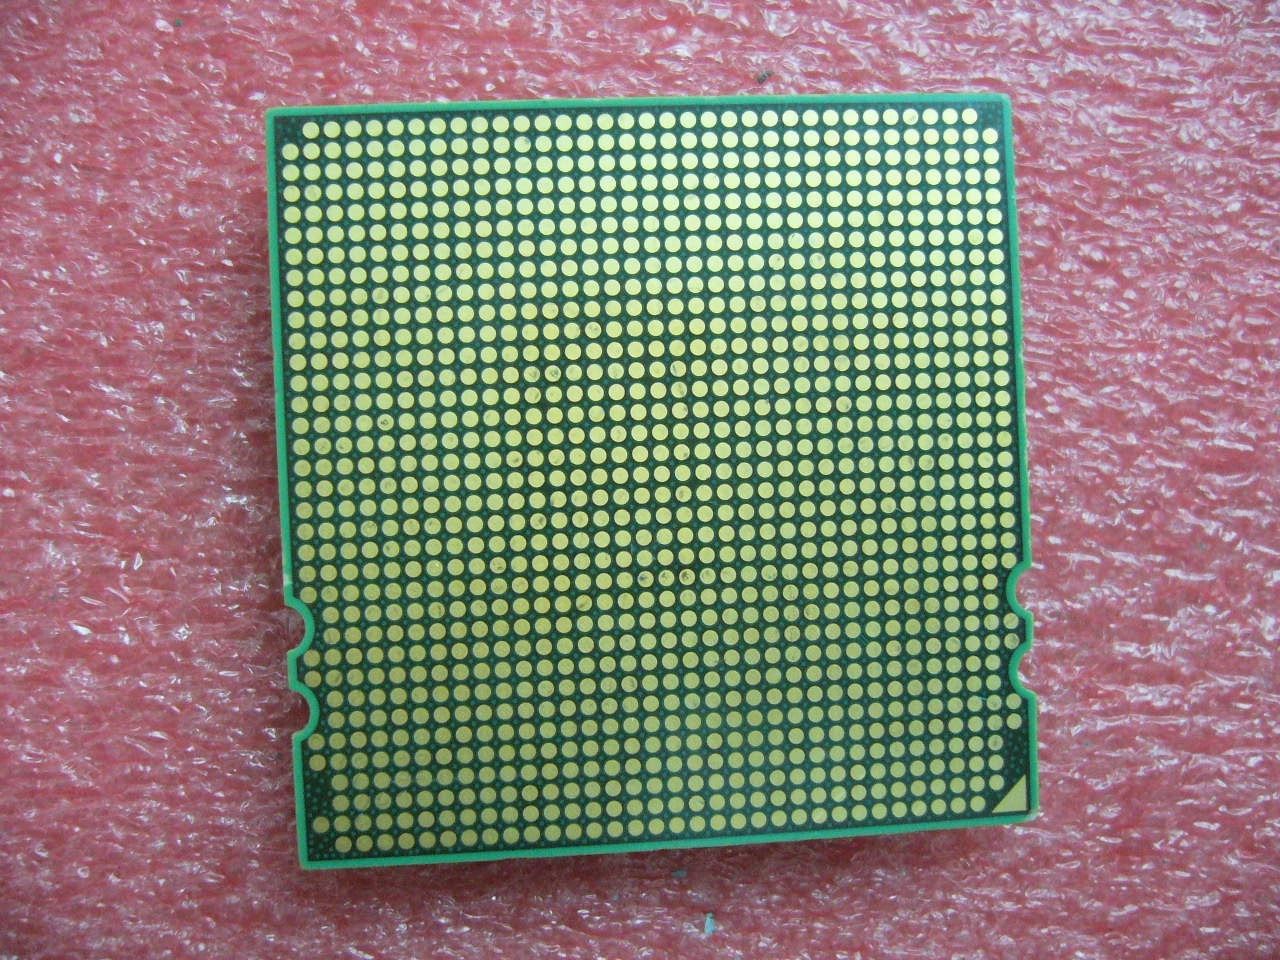 QTY 1x AMD Opteron 8358 SE 2.4 GHz Quad-Core (OS8358YAL4BGD) Socket F 1207 - zum Schließen ins Bild klicken